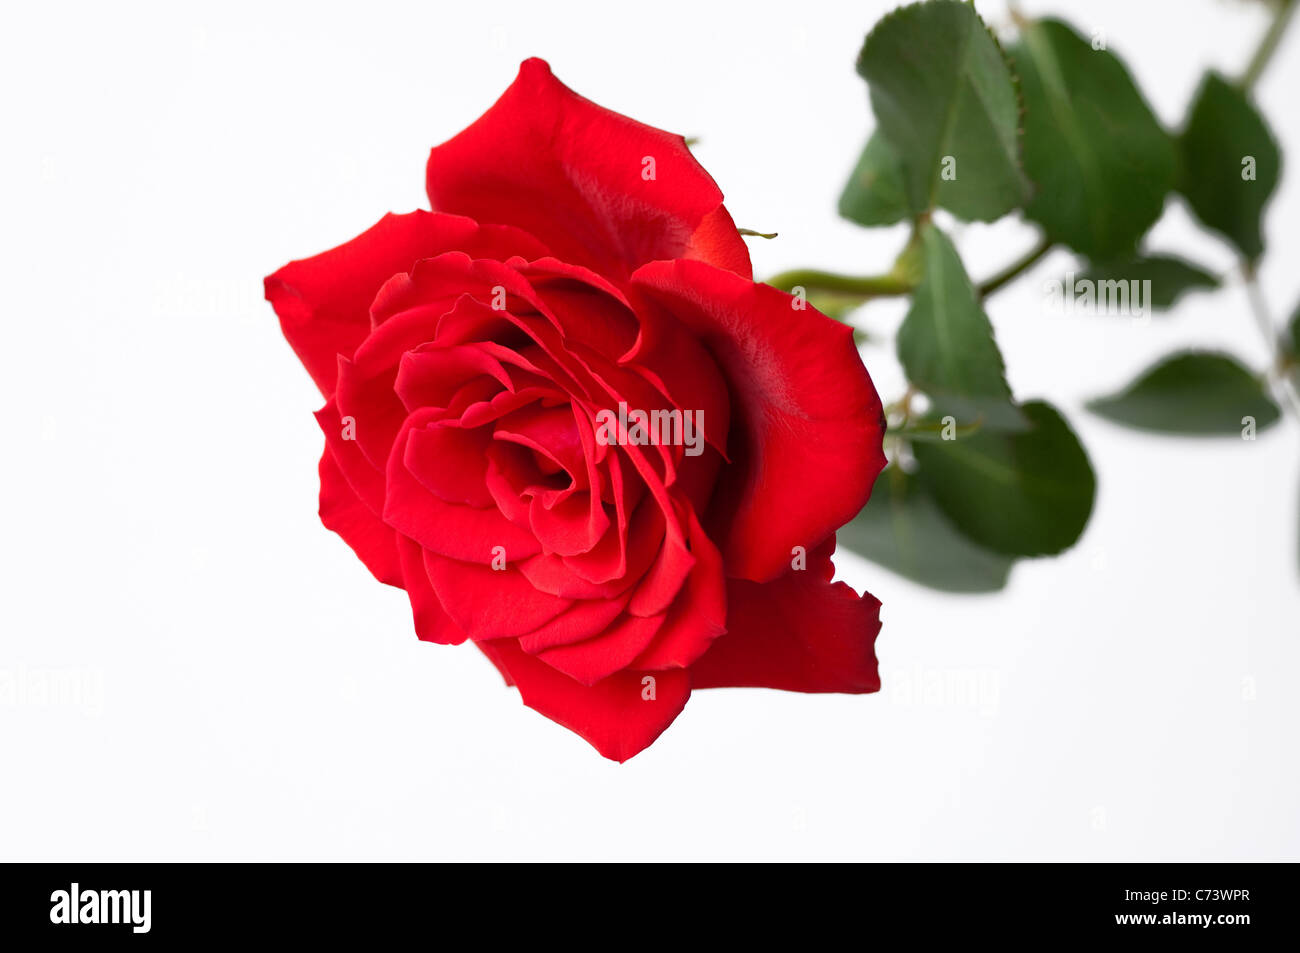 Rose (Rosa sp.), la flor roja. Studio picture contra un fondo blanco. Foto de stock